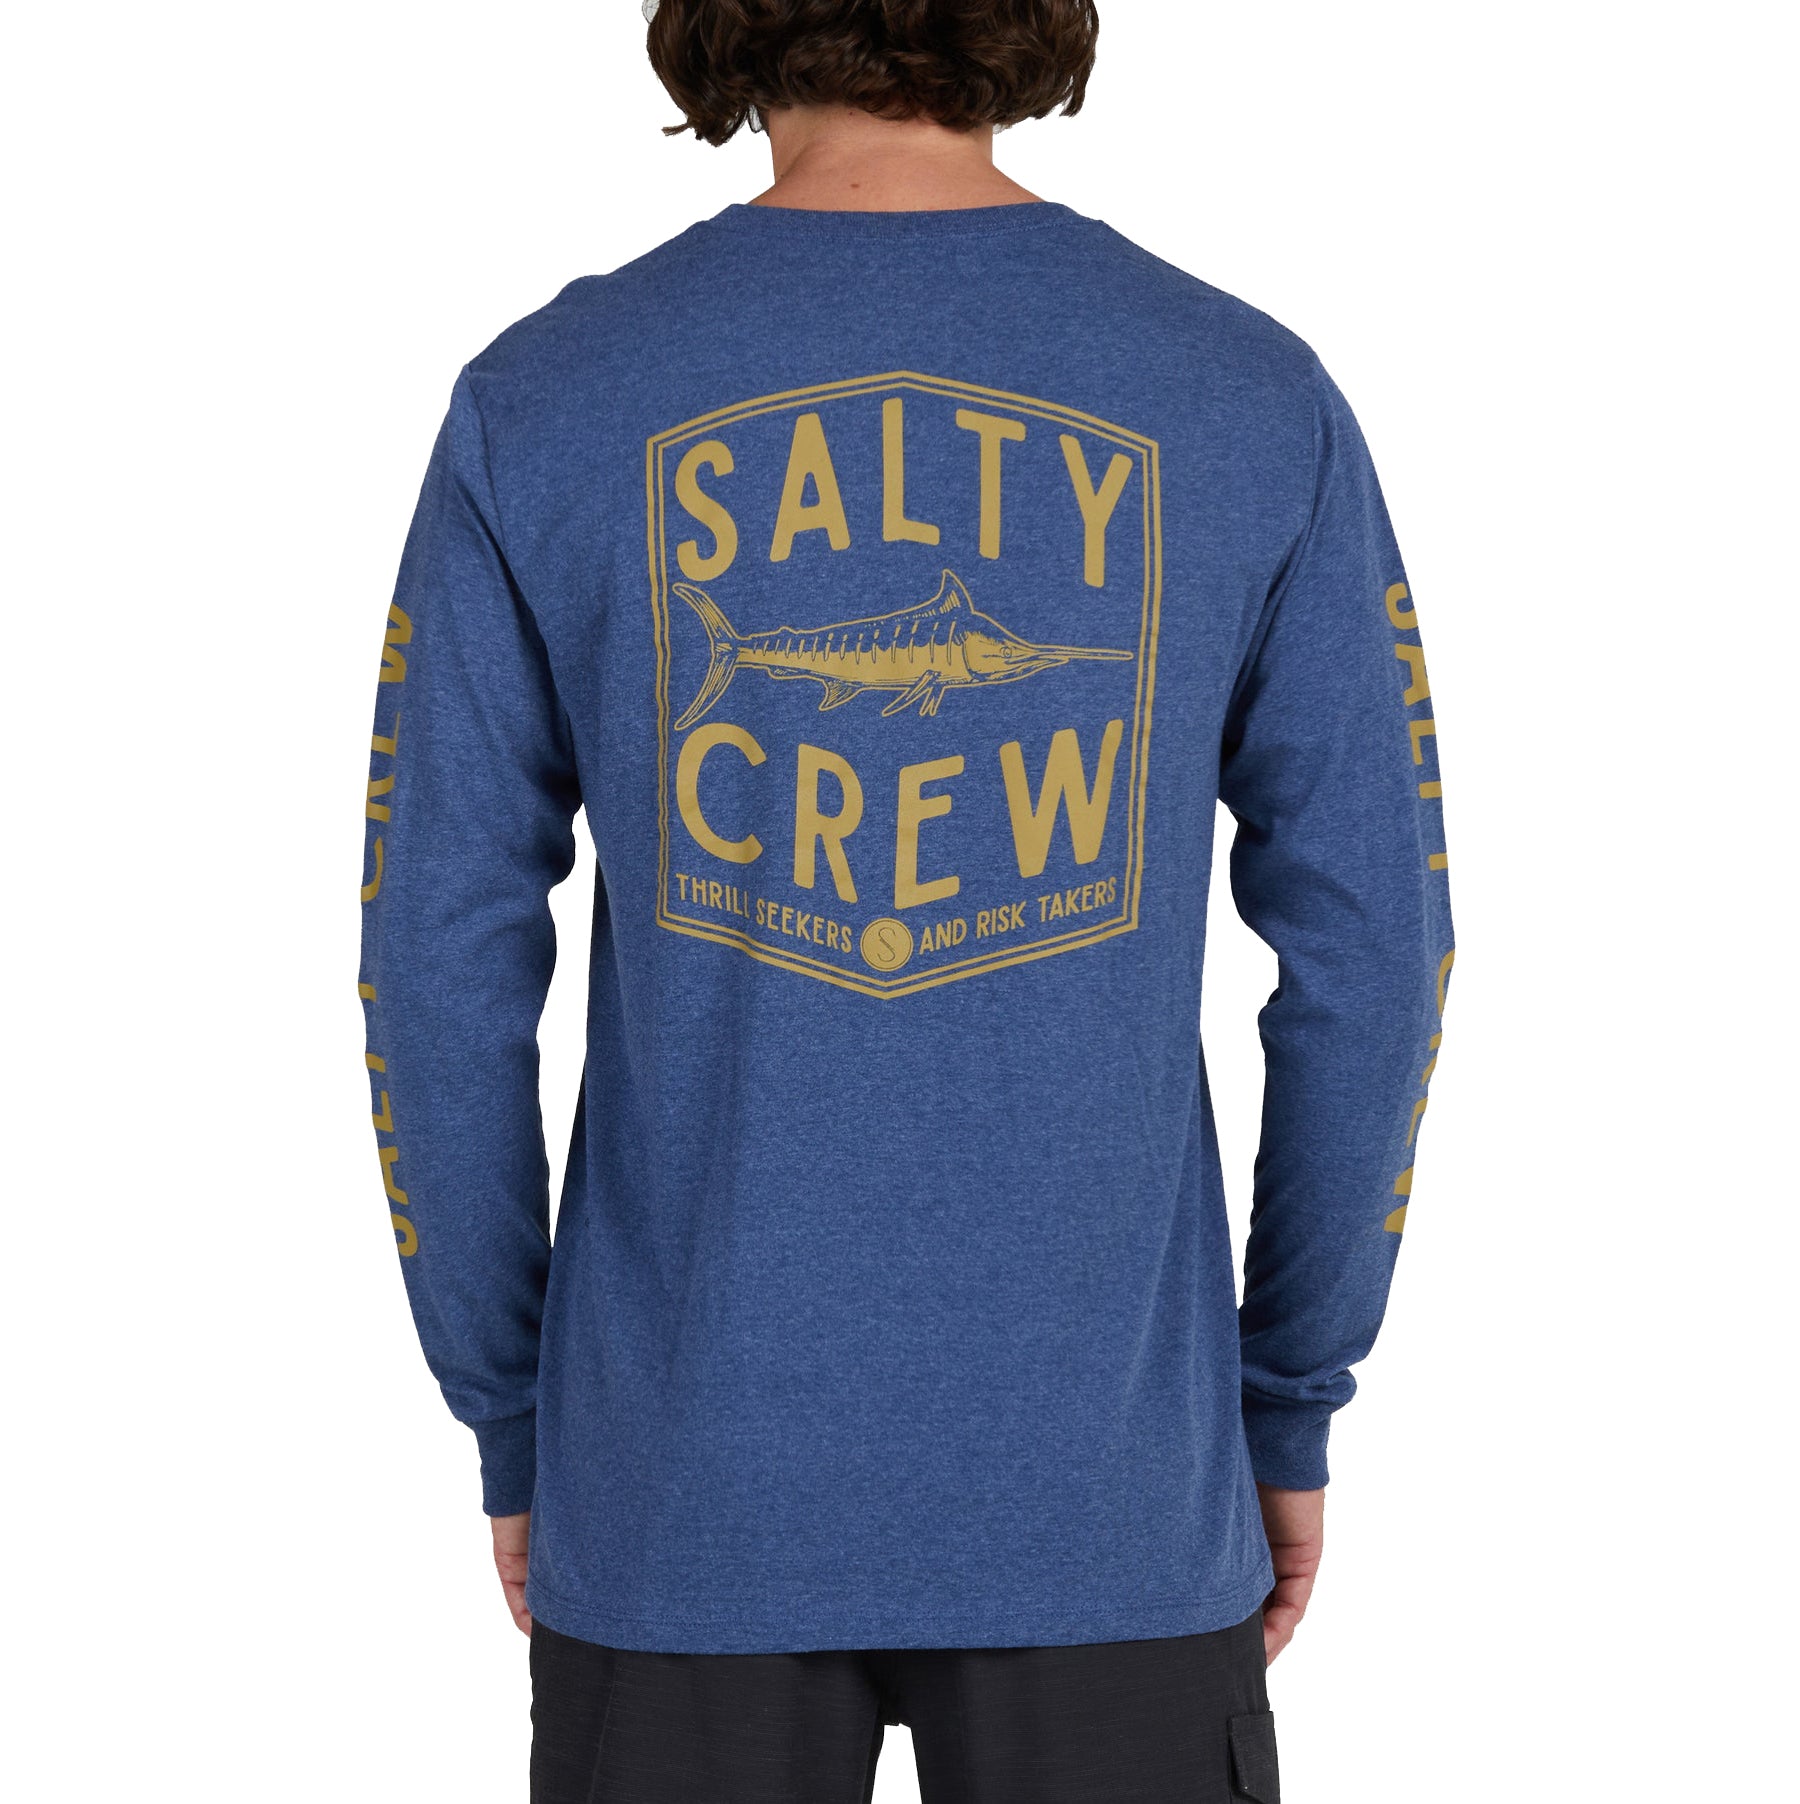 Salty Crew Fishery Standard L/S Tee Navy Heather M